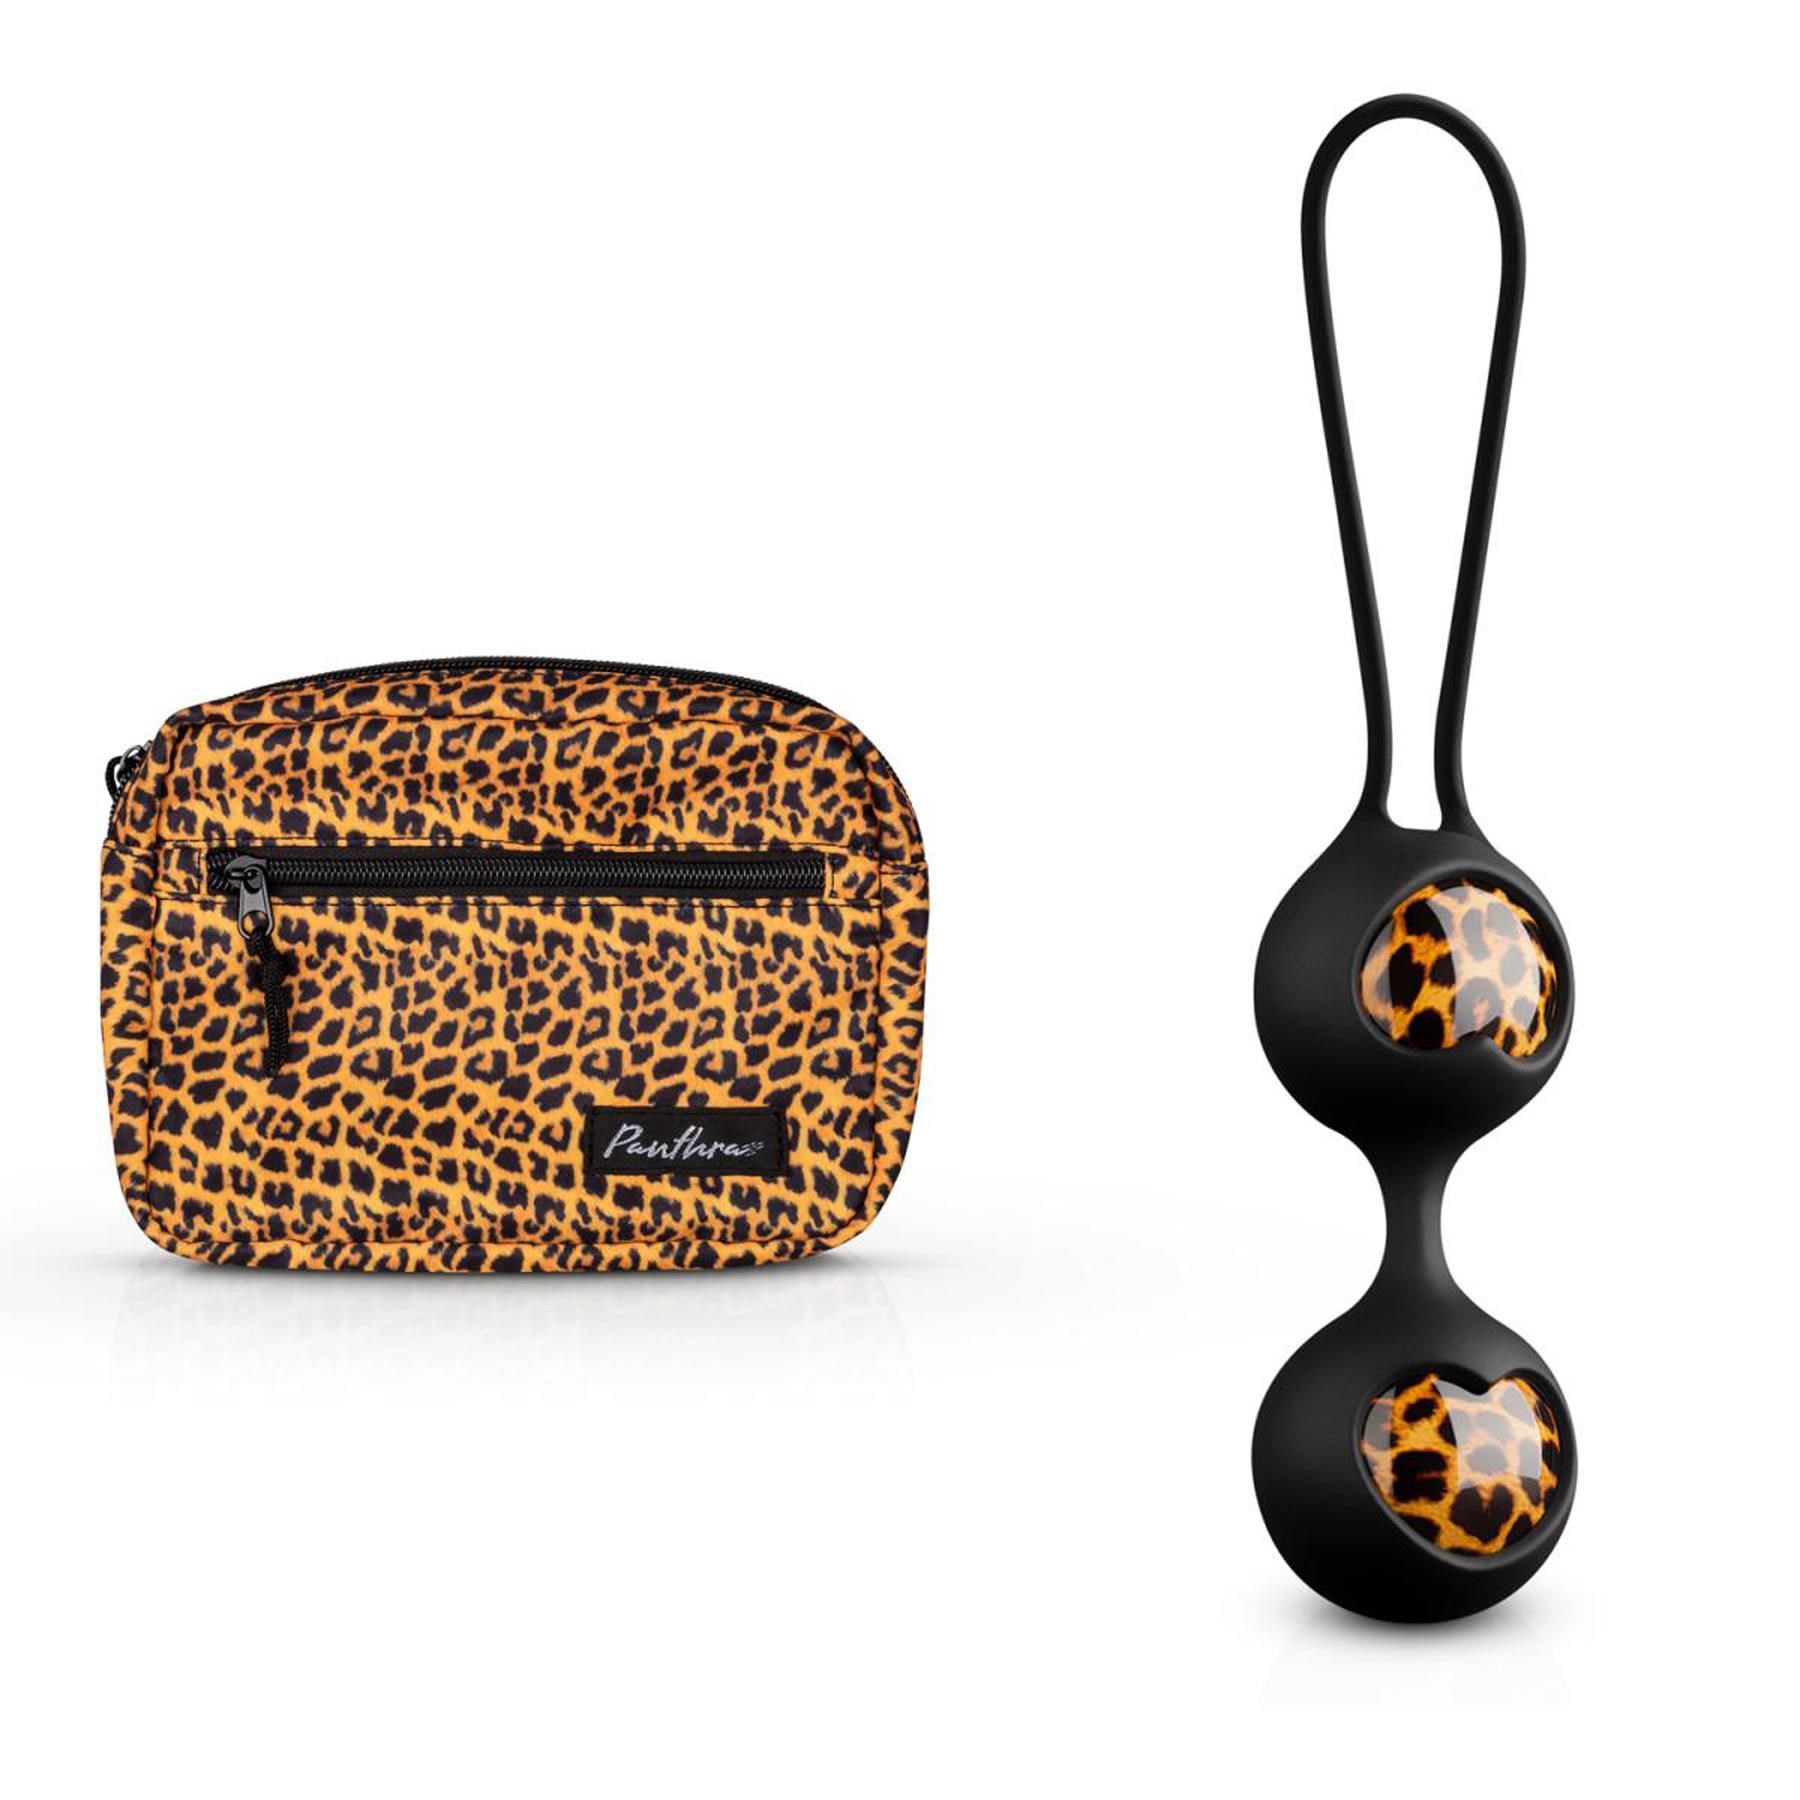 Panthra Zane Geisha Balls - Product and Storage Bag